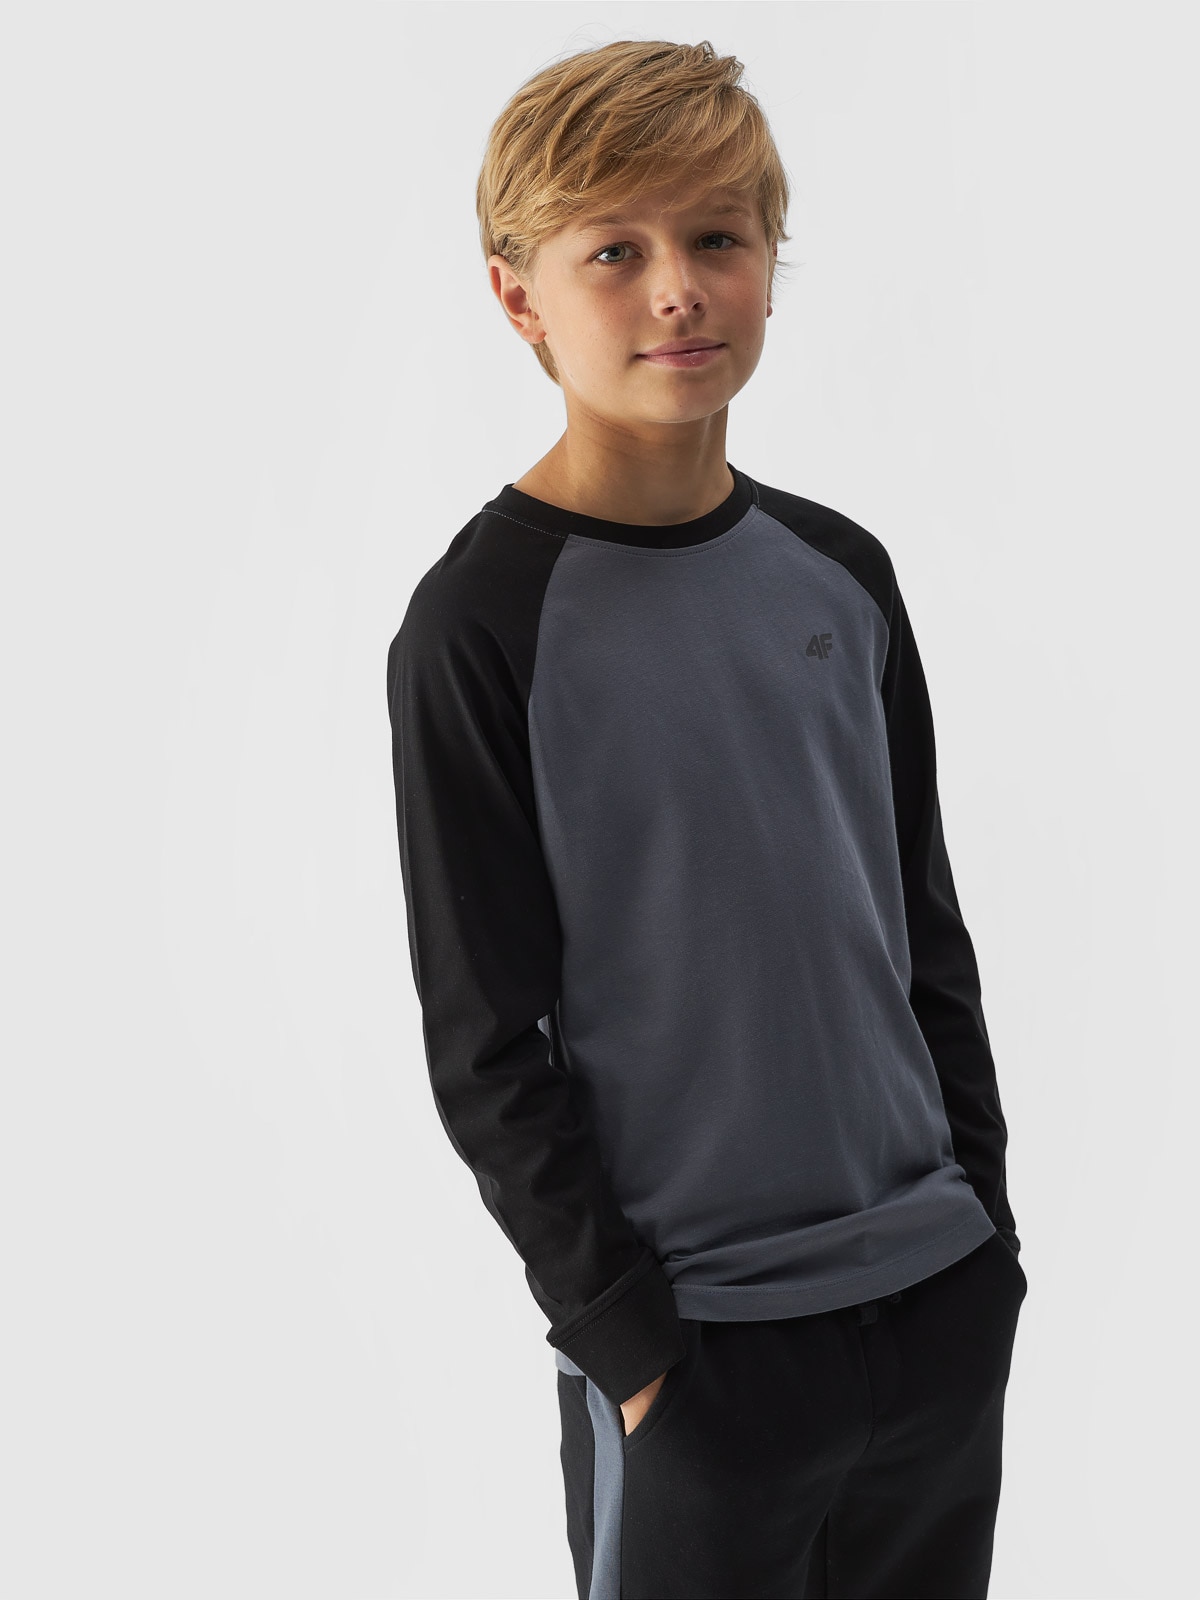 Chlapecké hladké tričko regular s dlouhými rukávy - šedé